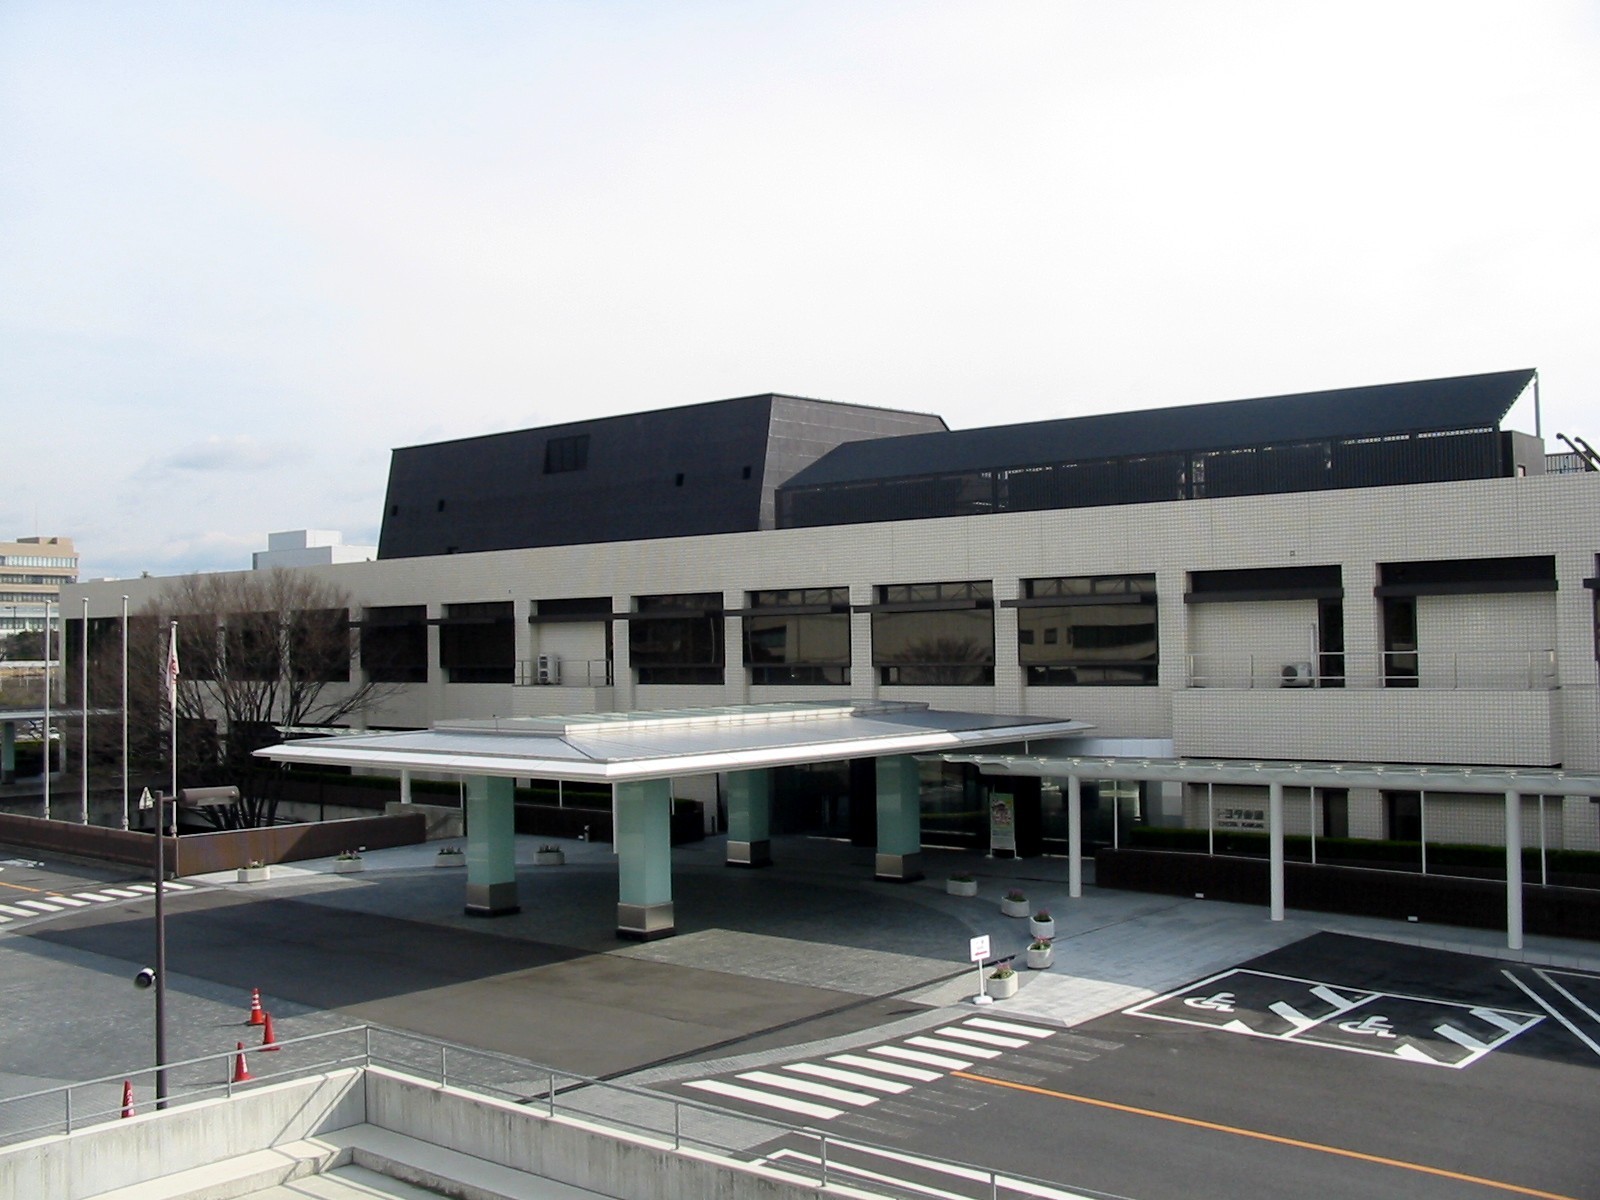 Toyota Kaikan museum